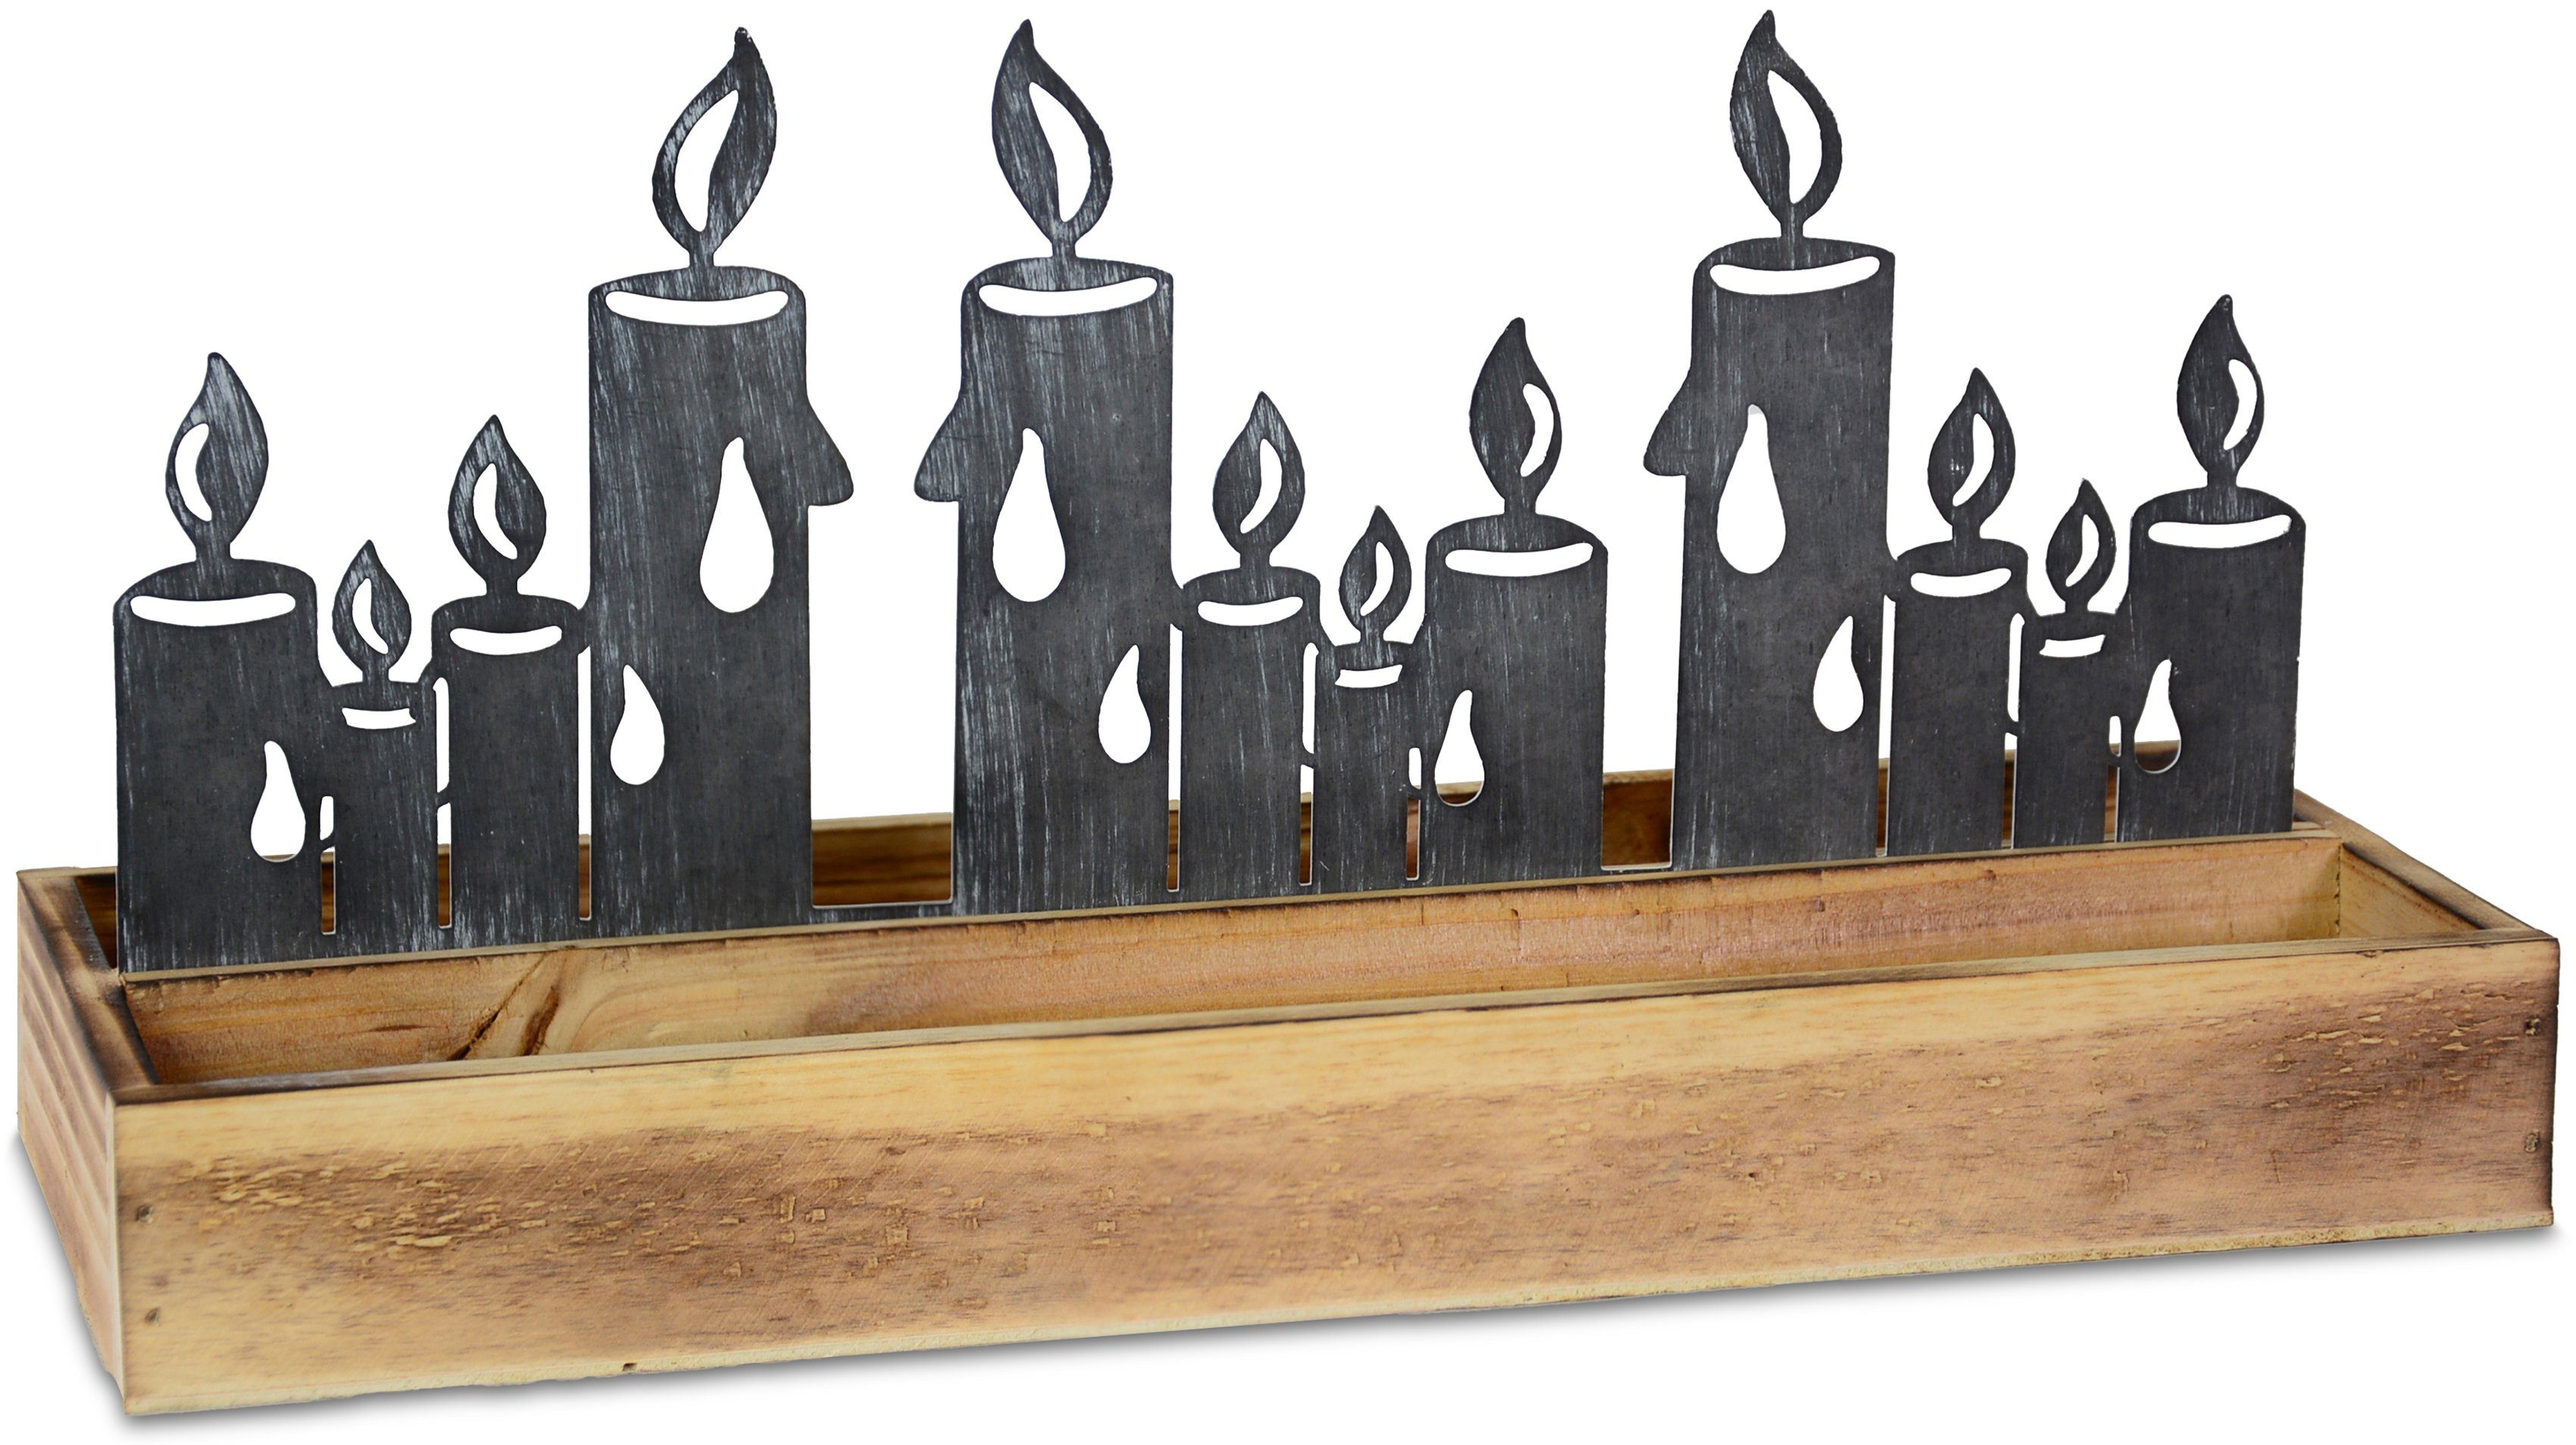 RIFFELMACHER & Kerzensilhoutte, Tablett Metall mit Kerzensilhouette Metall, Holz, Weihnachtsdeko, WEINBERGER Holz-Tablett